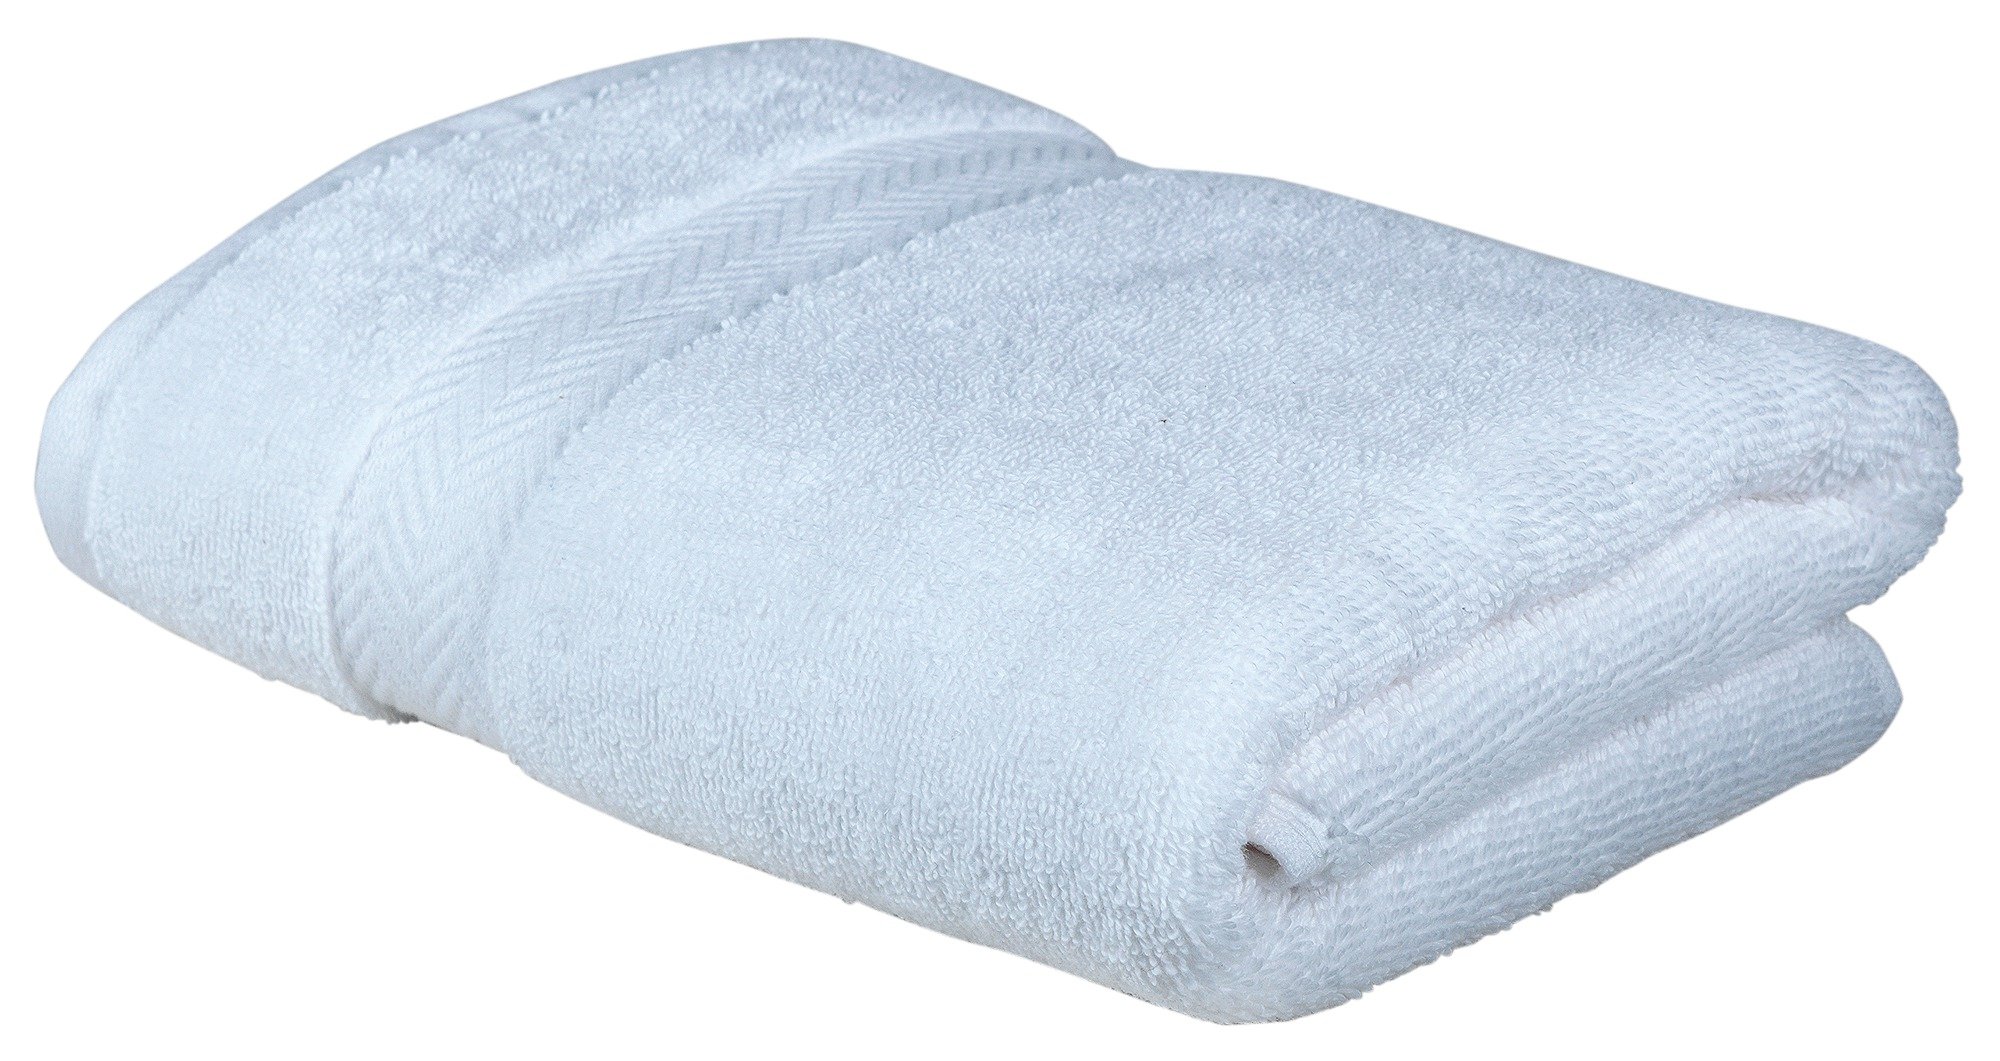 Kingsley - Hygro Hand - Towel Review